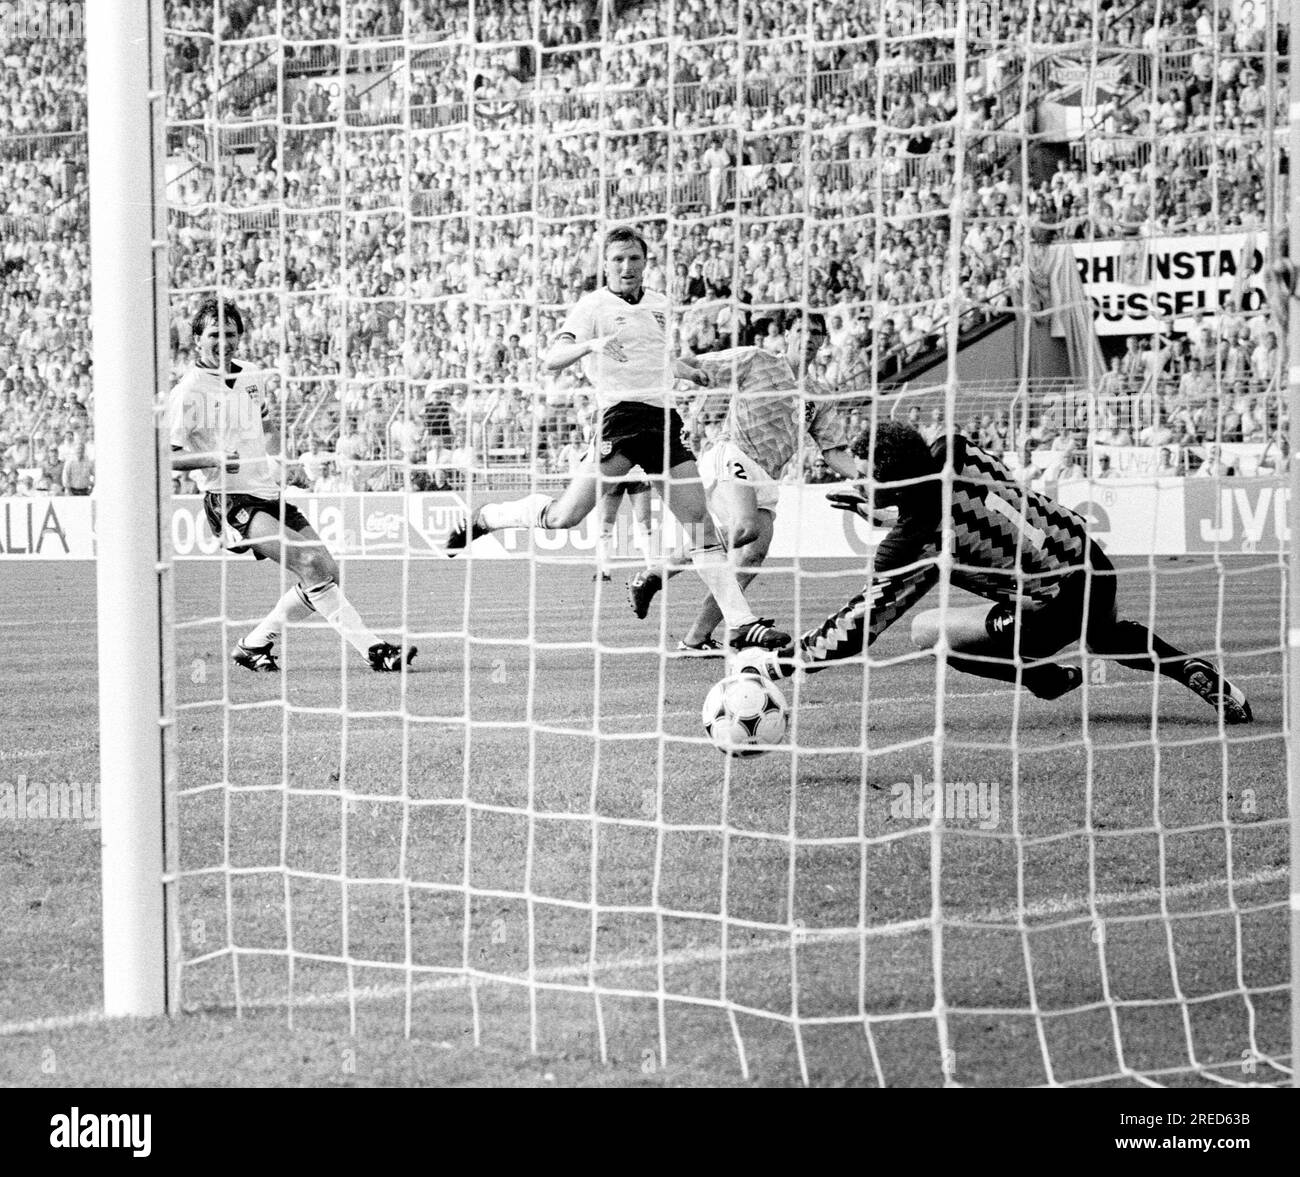 Soccer EM 1988 in Germany / England - Netherlands 1:3 /15.06.1988 in Düsseldorf / Goal 1:2 by Marco van Basten against TW Peter Shilton [automated translation] Stock Photo